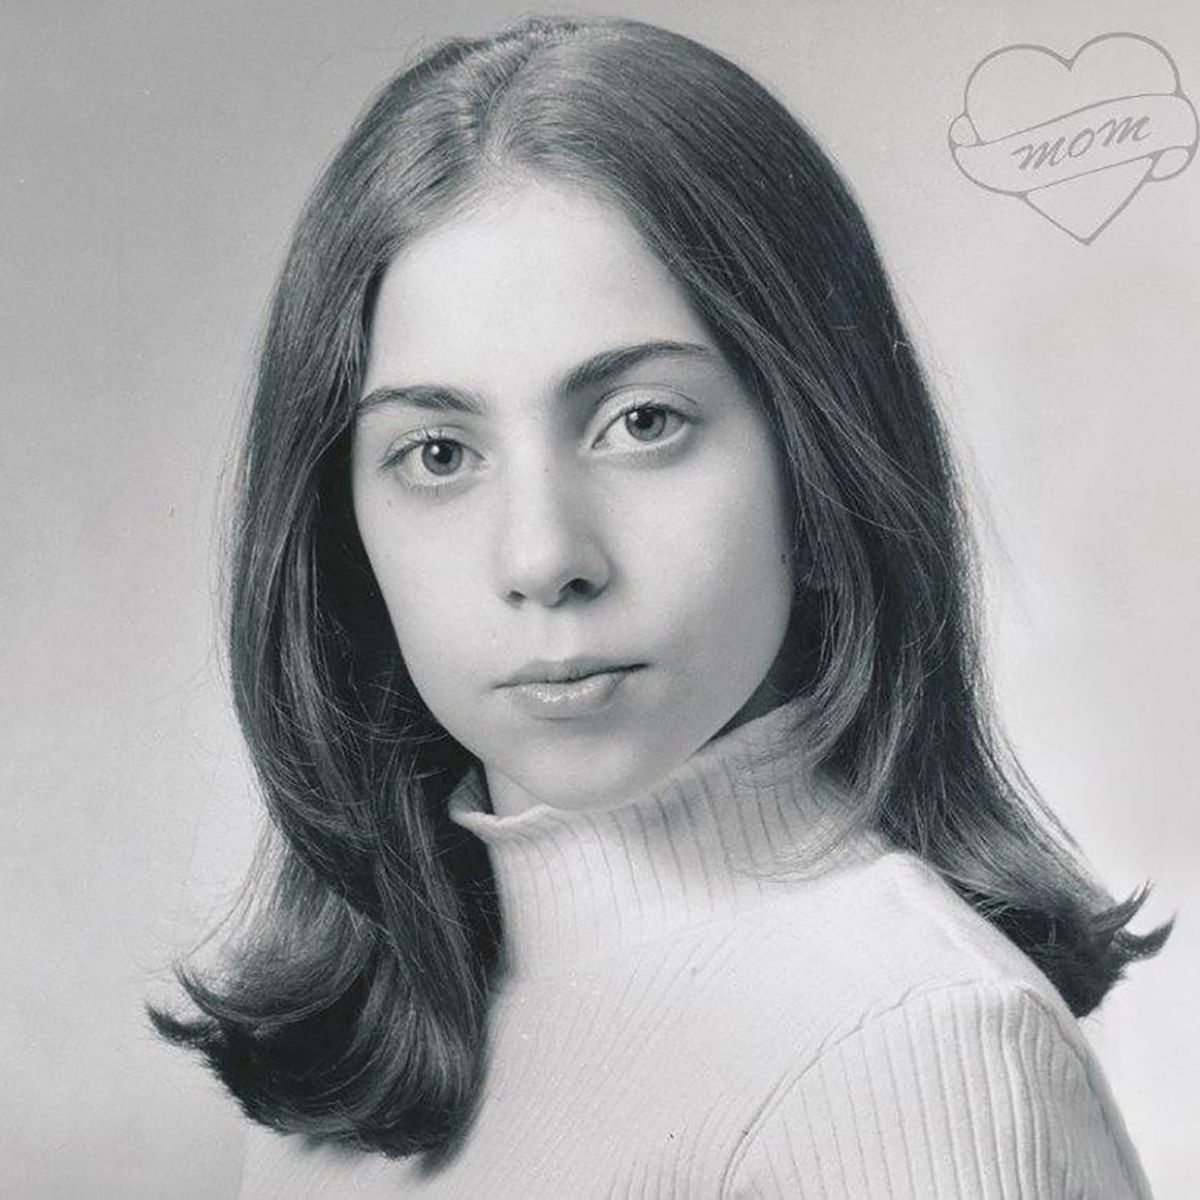 Lady Gaga as a teenager